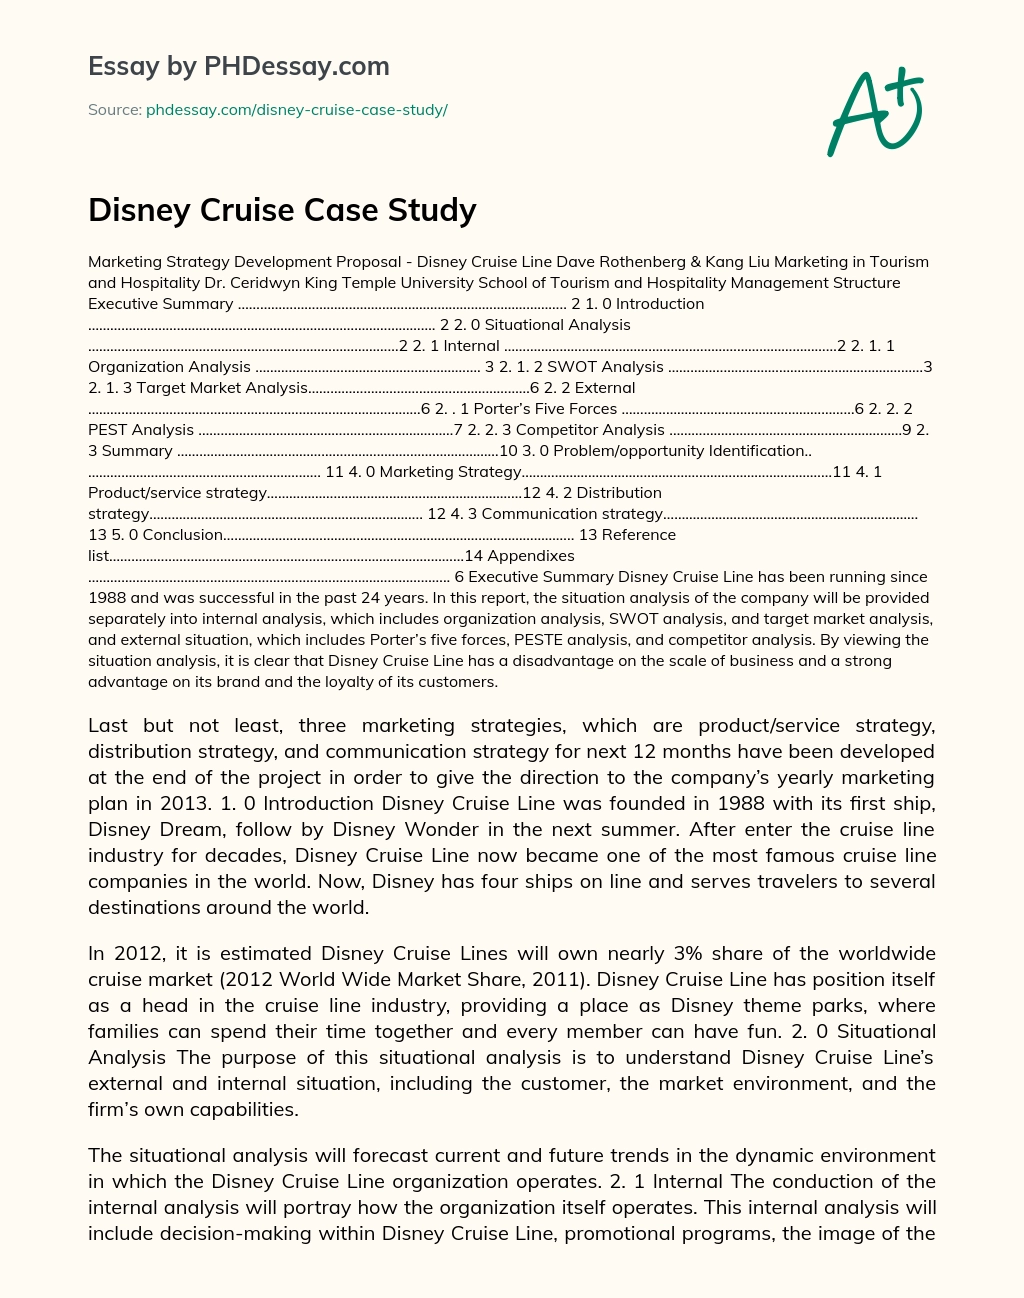 Disney Cruise Case Study essay